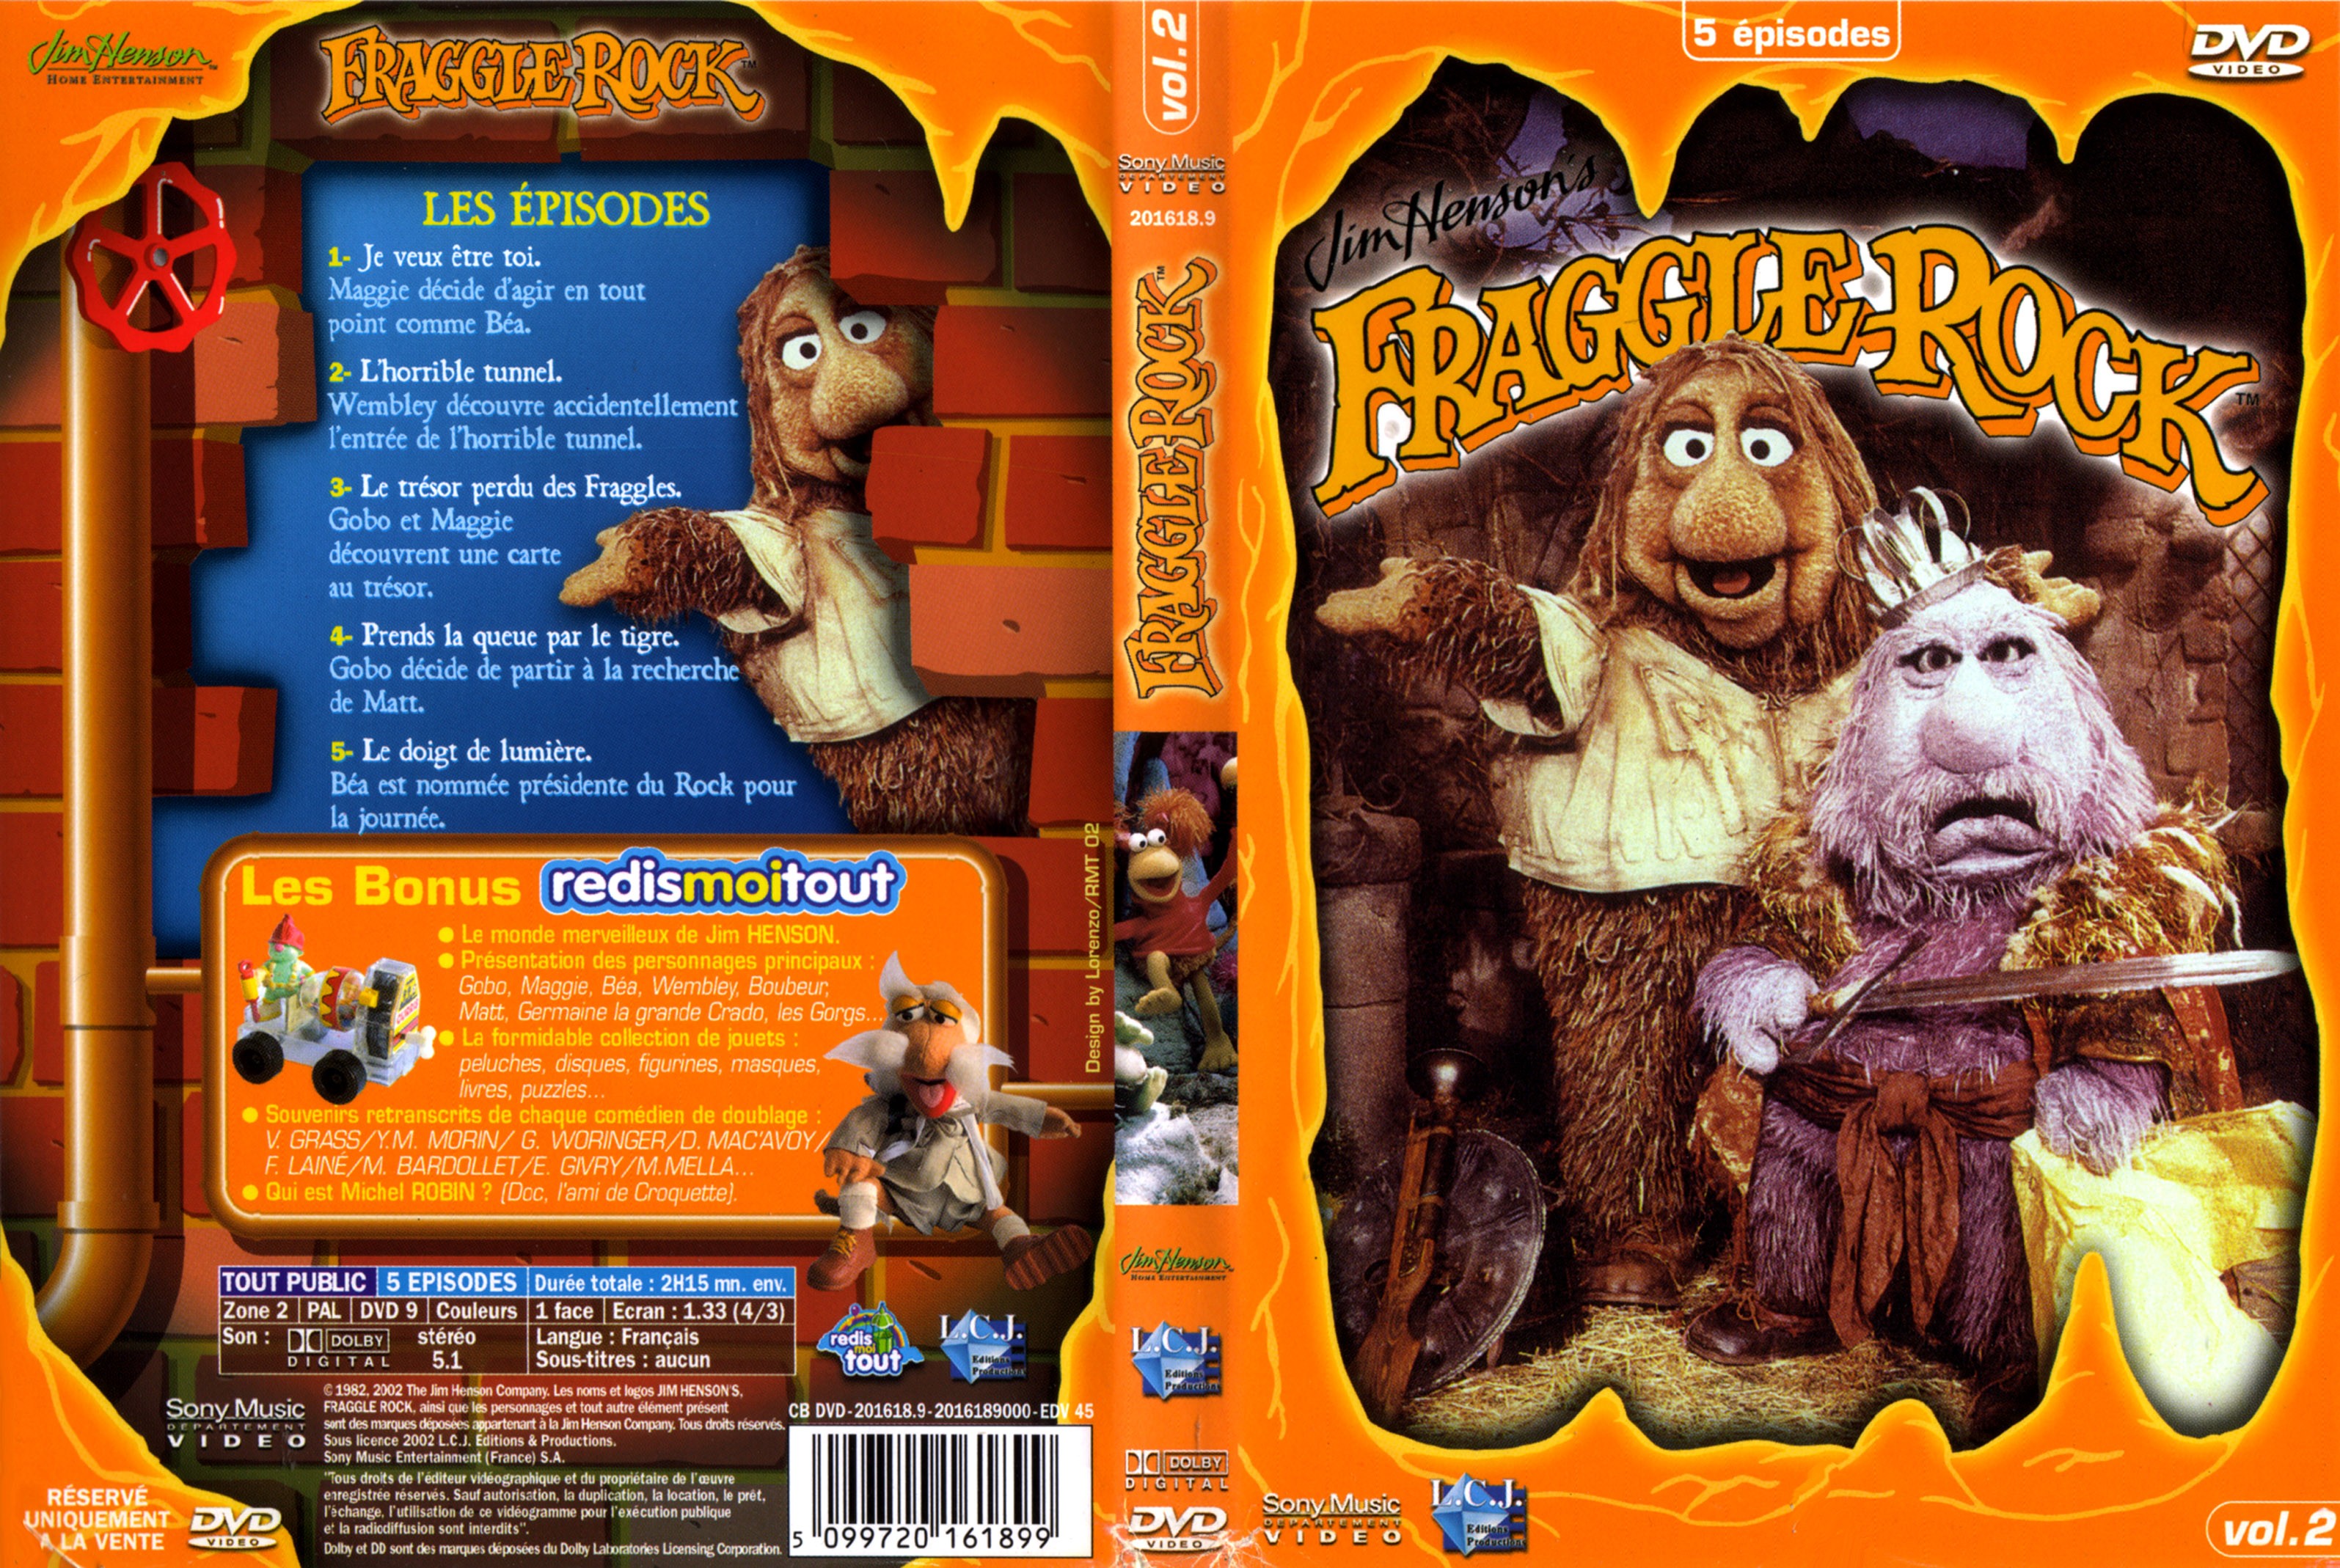 Jaquette DVD Fraggle rock vol 2